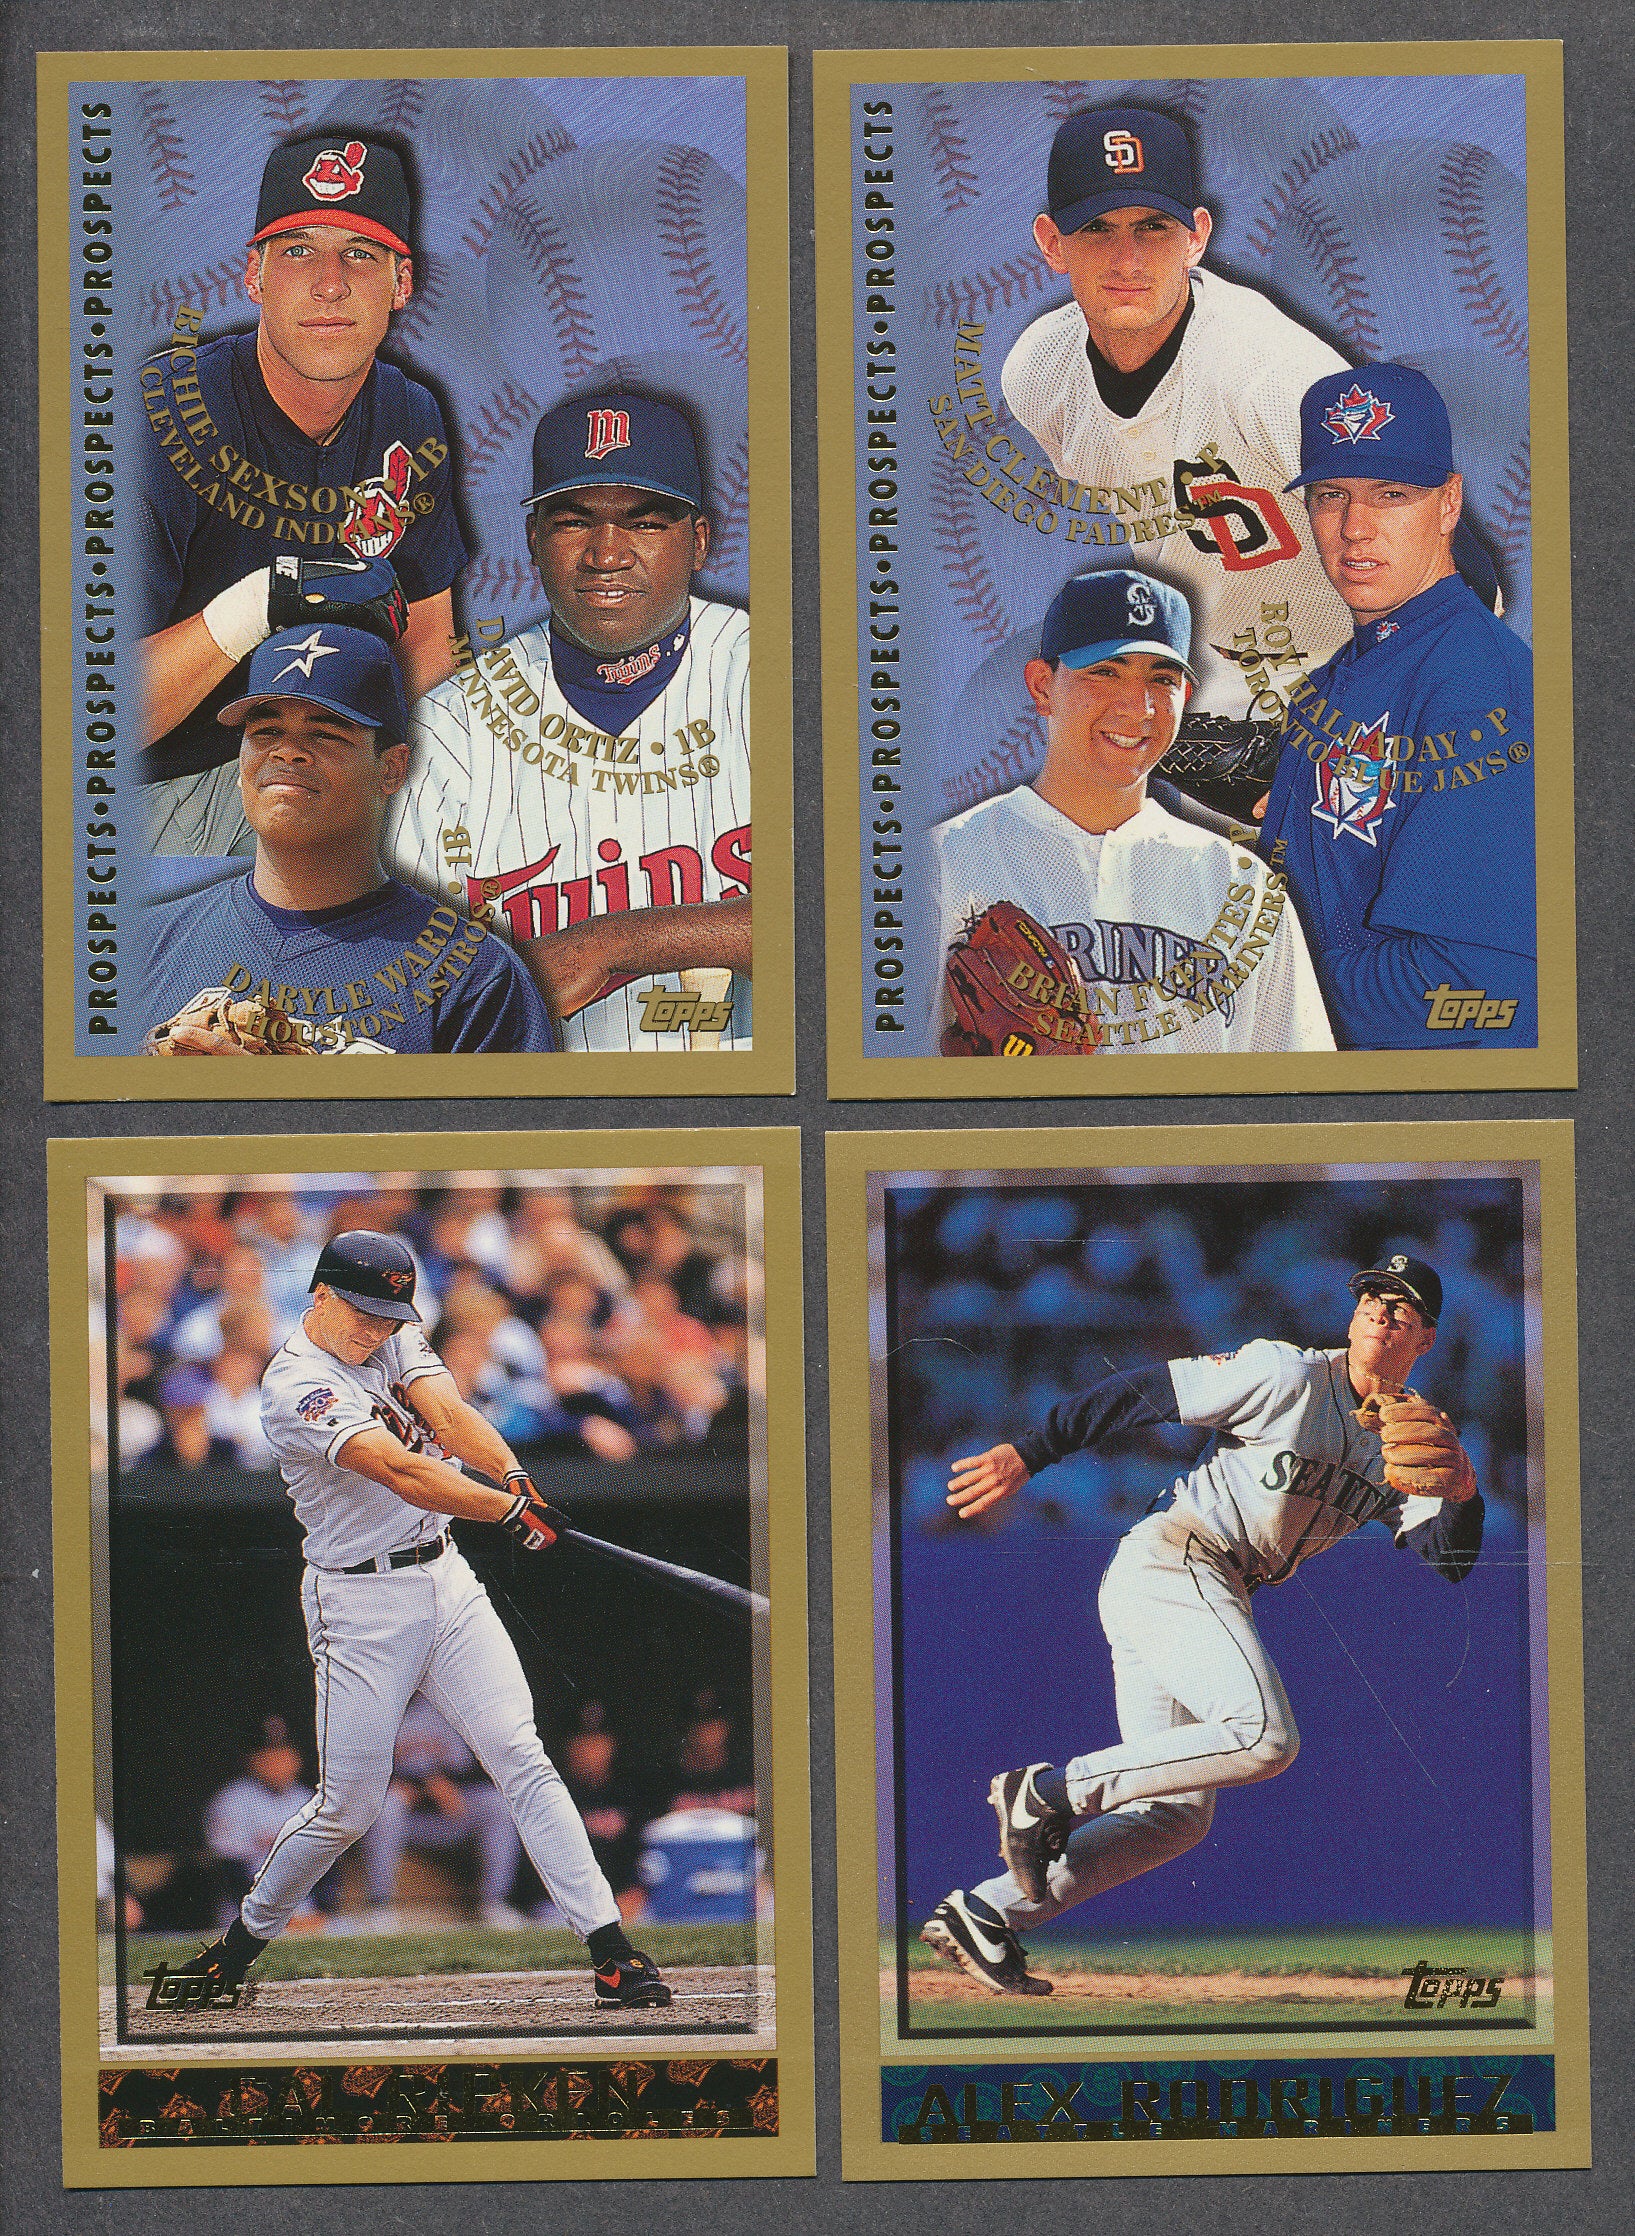 1998 Topps Baseball Complete Set (503) NM/MT MT